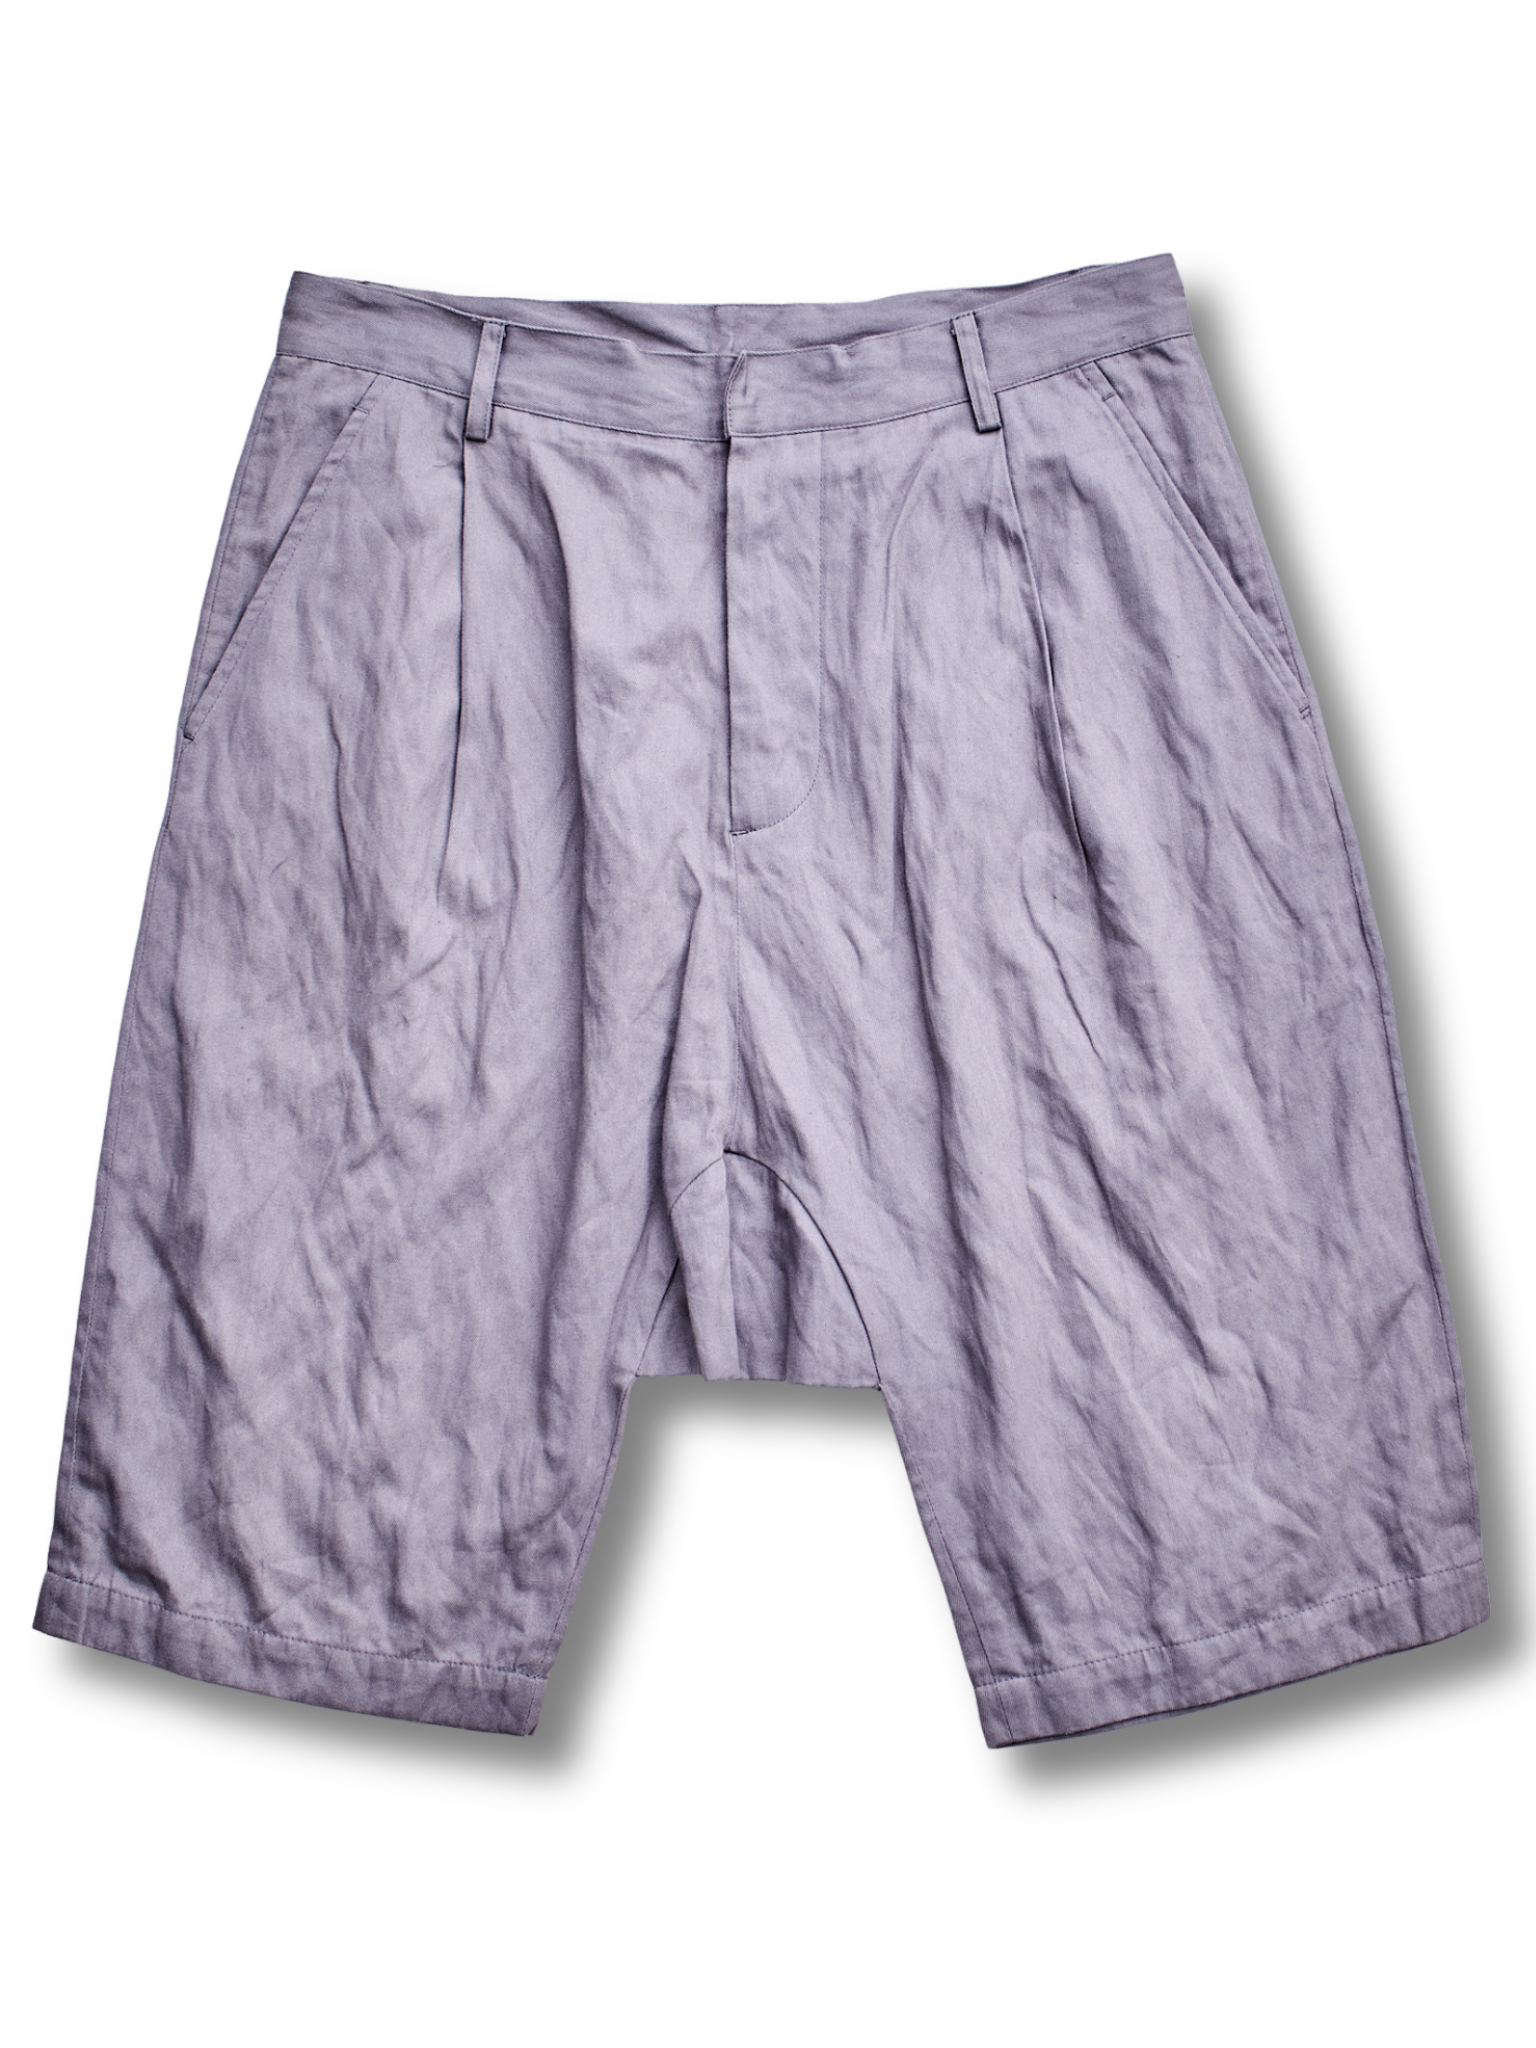 Charcoal Grey Drop Crotch 3/4 Length Shorts